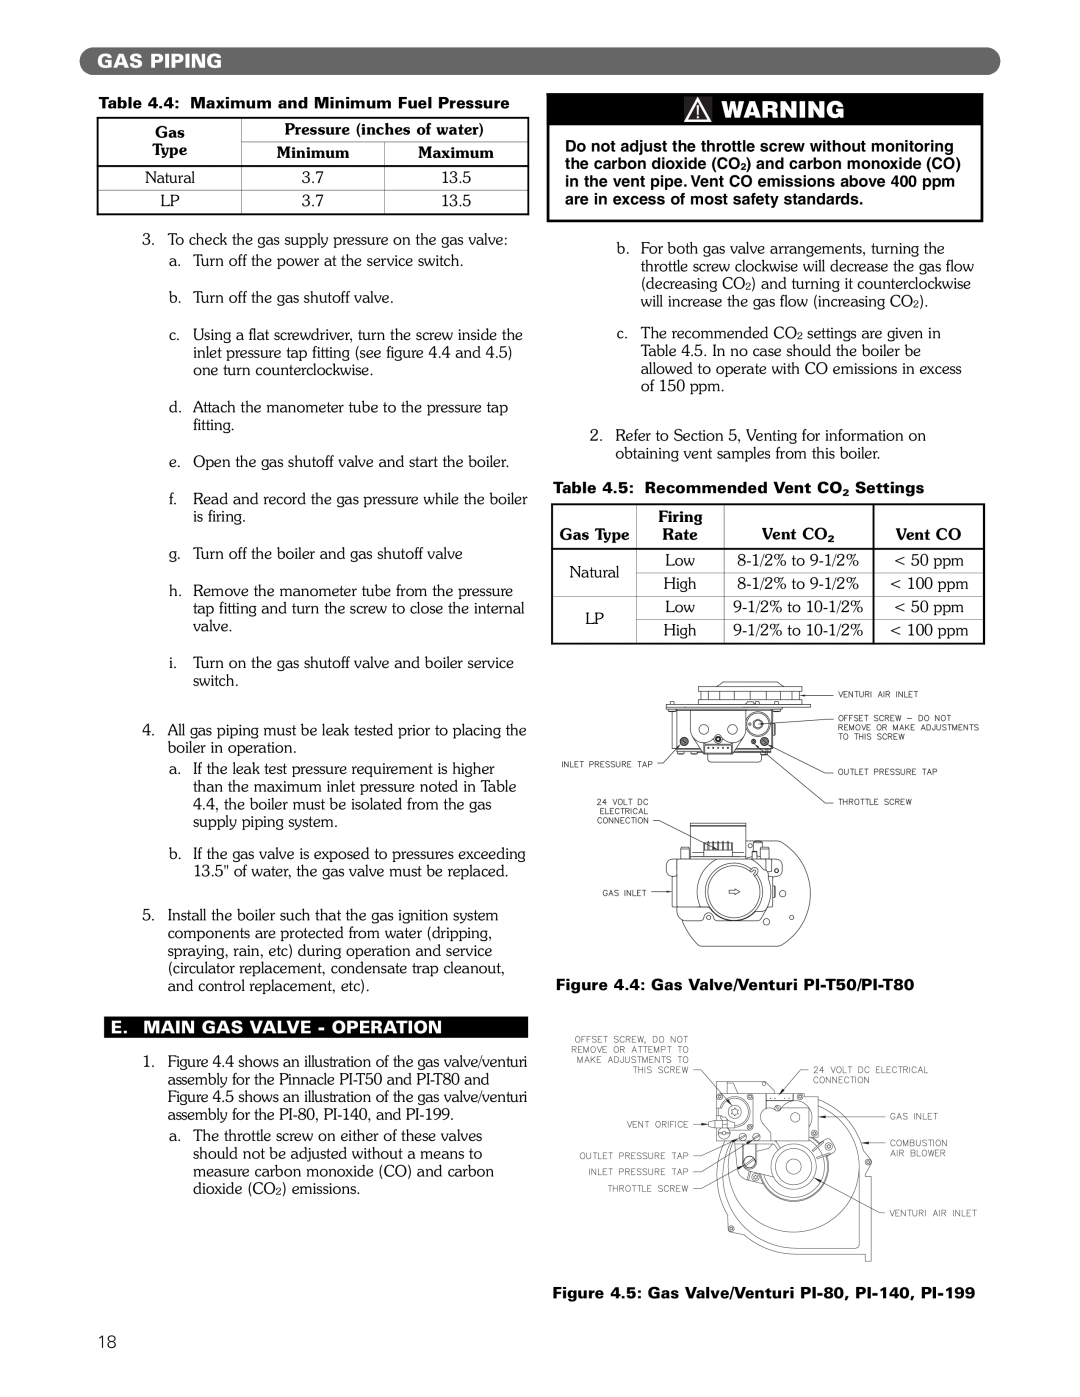 PB Heat Gas Boiler manual Gas Piping, E. Main Gas Valve - Operation 